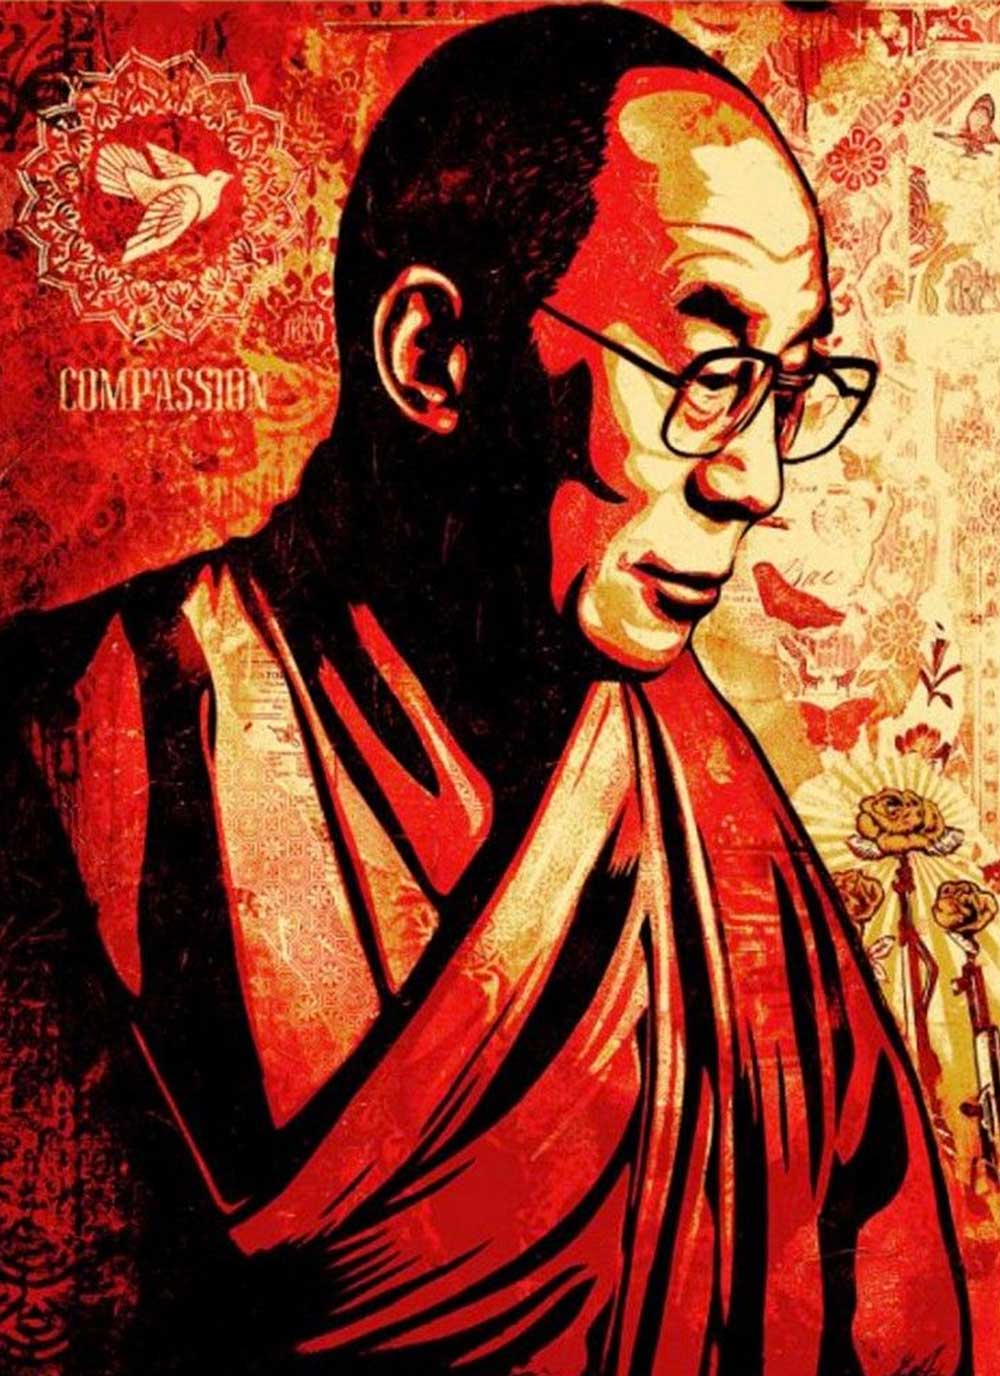 DETAIL: Shepard Fairey - Compassion (His Holiness the Dalai Lama)